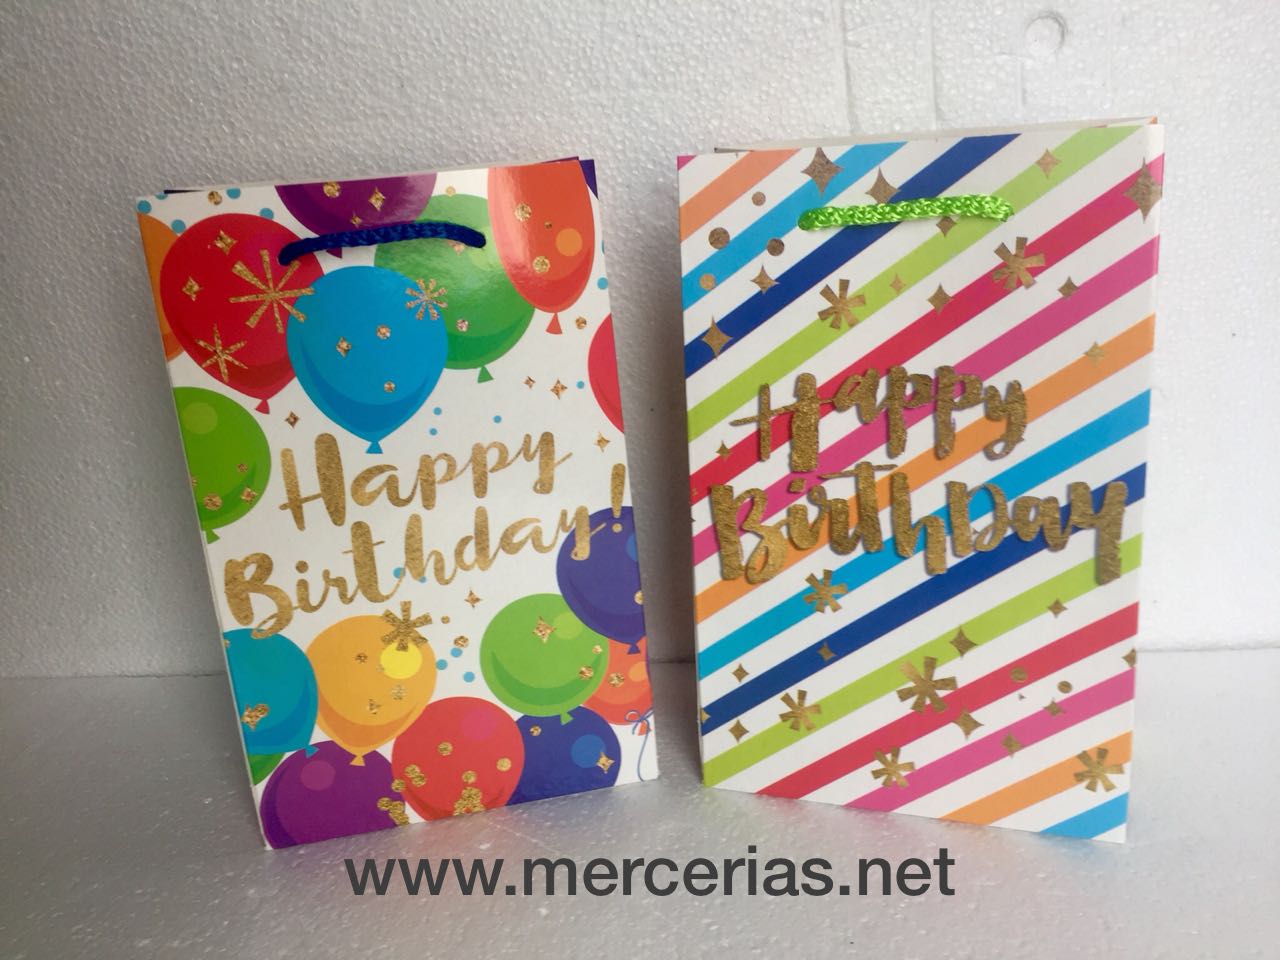 Bolsa para Regalo Feliz Cumpleaños M-4556 - Merceria en Linea